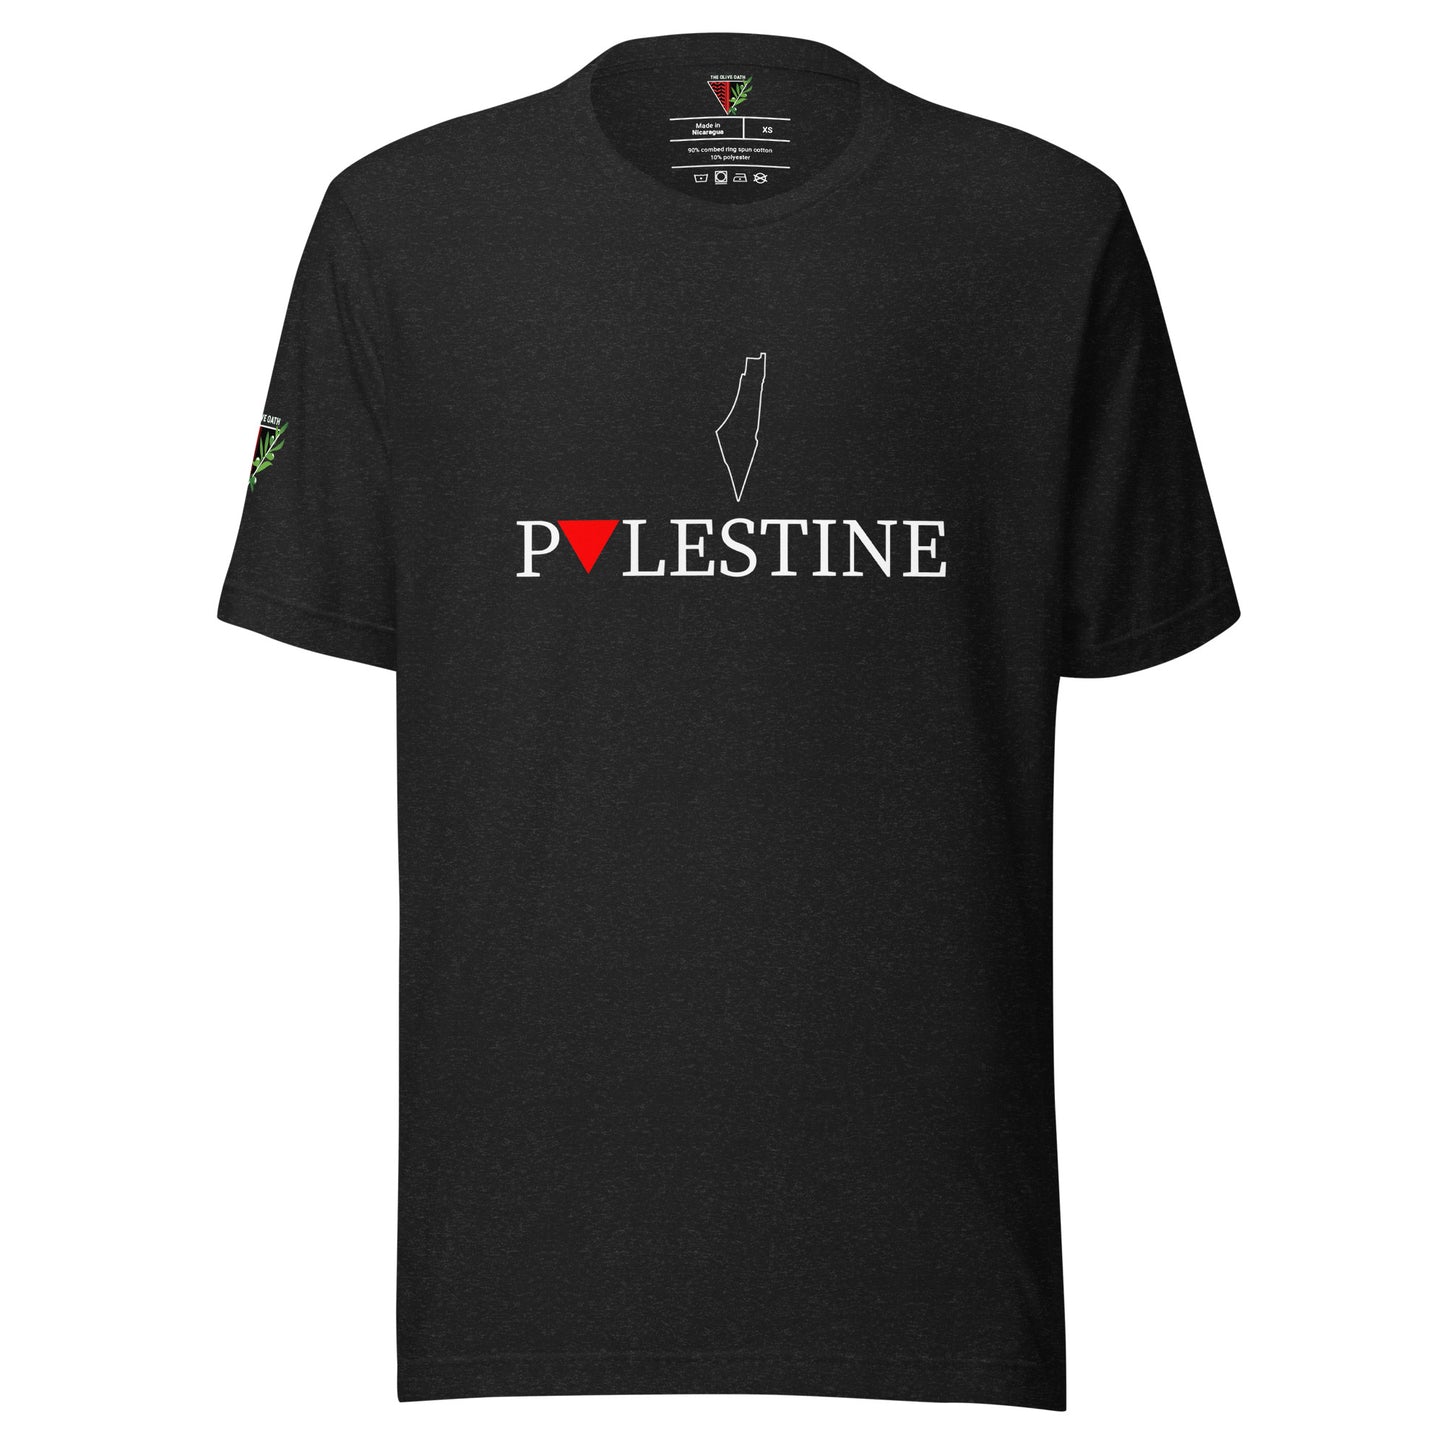 Palestine t-shirt